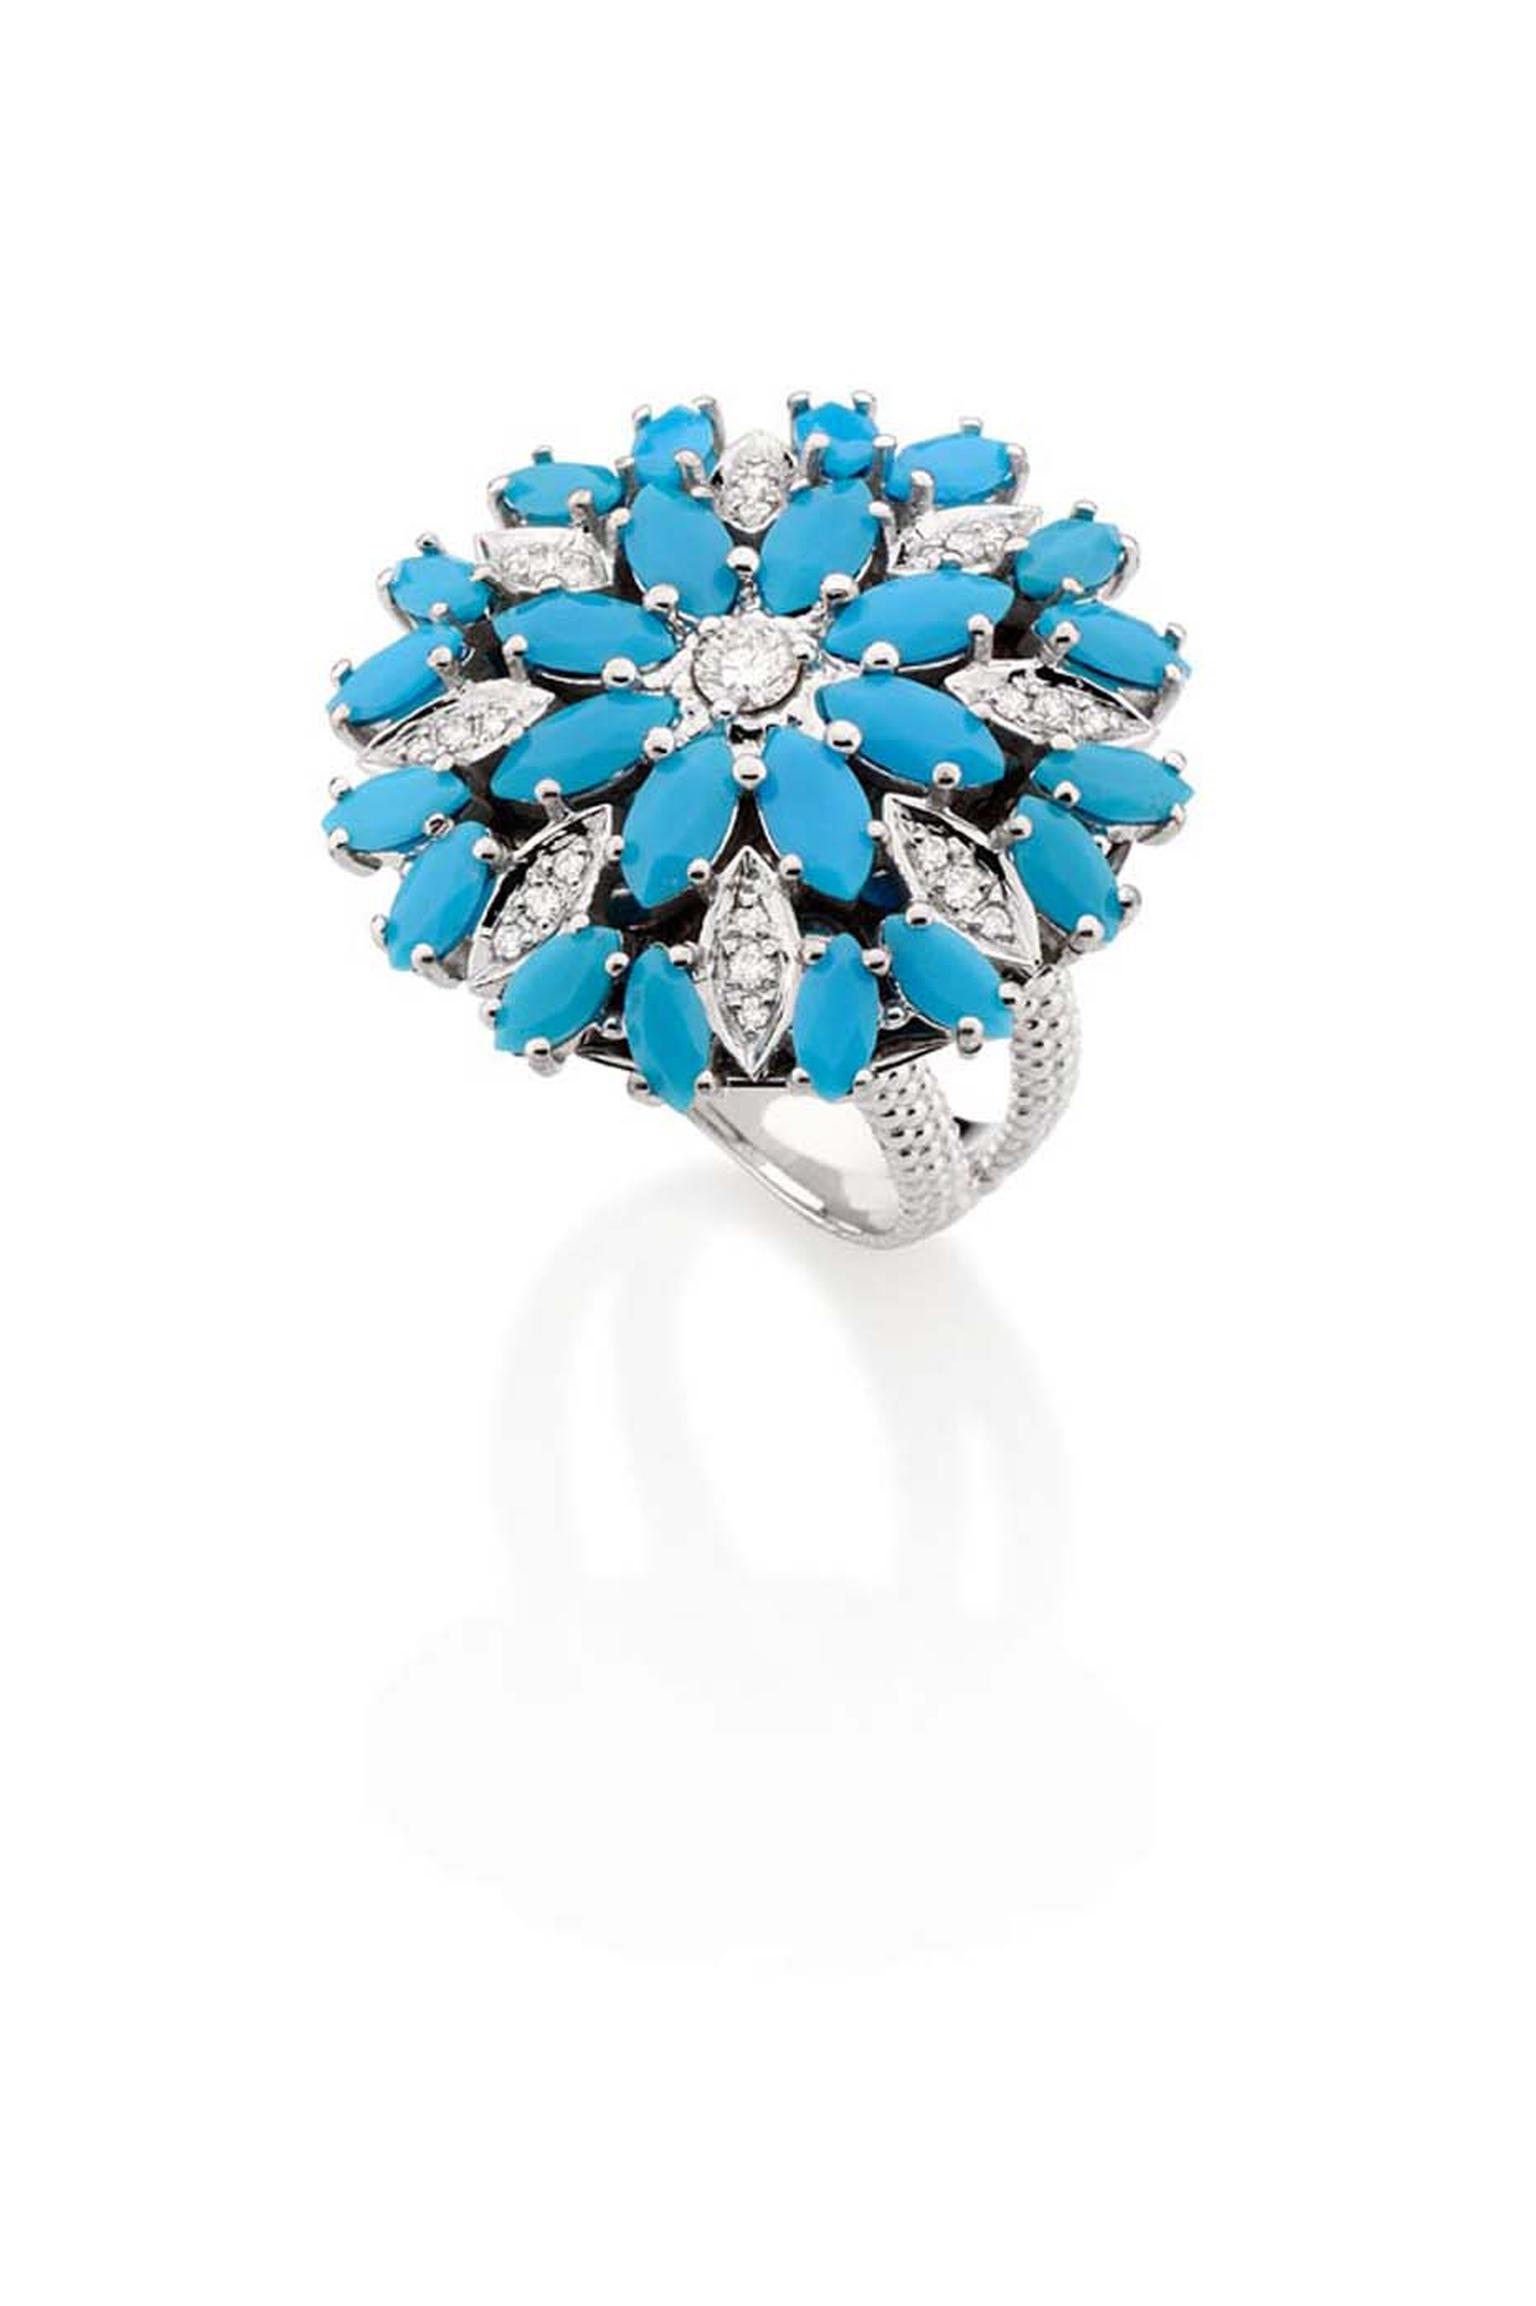 Carla Amorim white gold Aquario ring with turquoise and white diamonds.